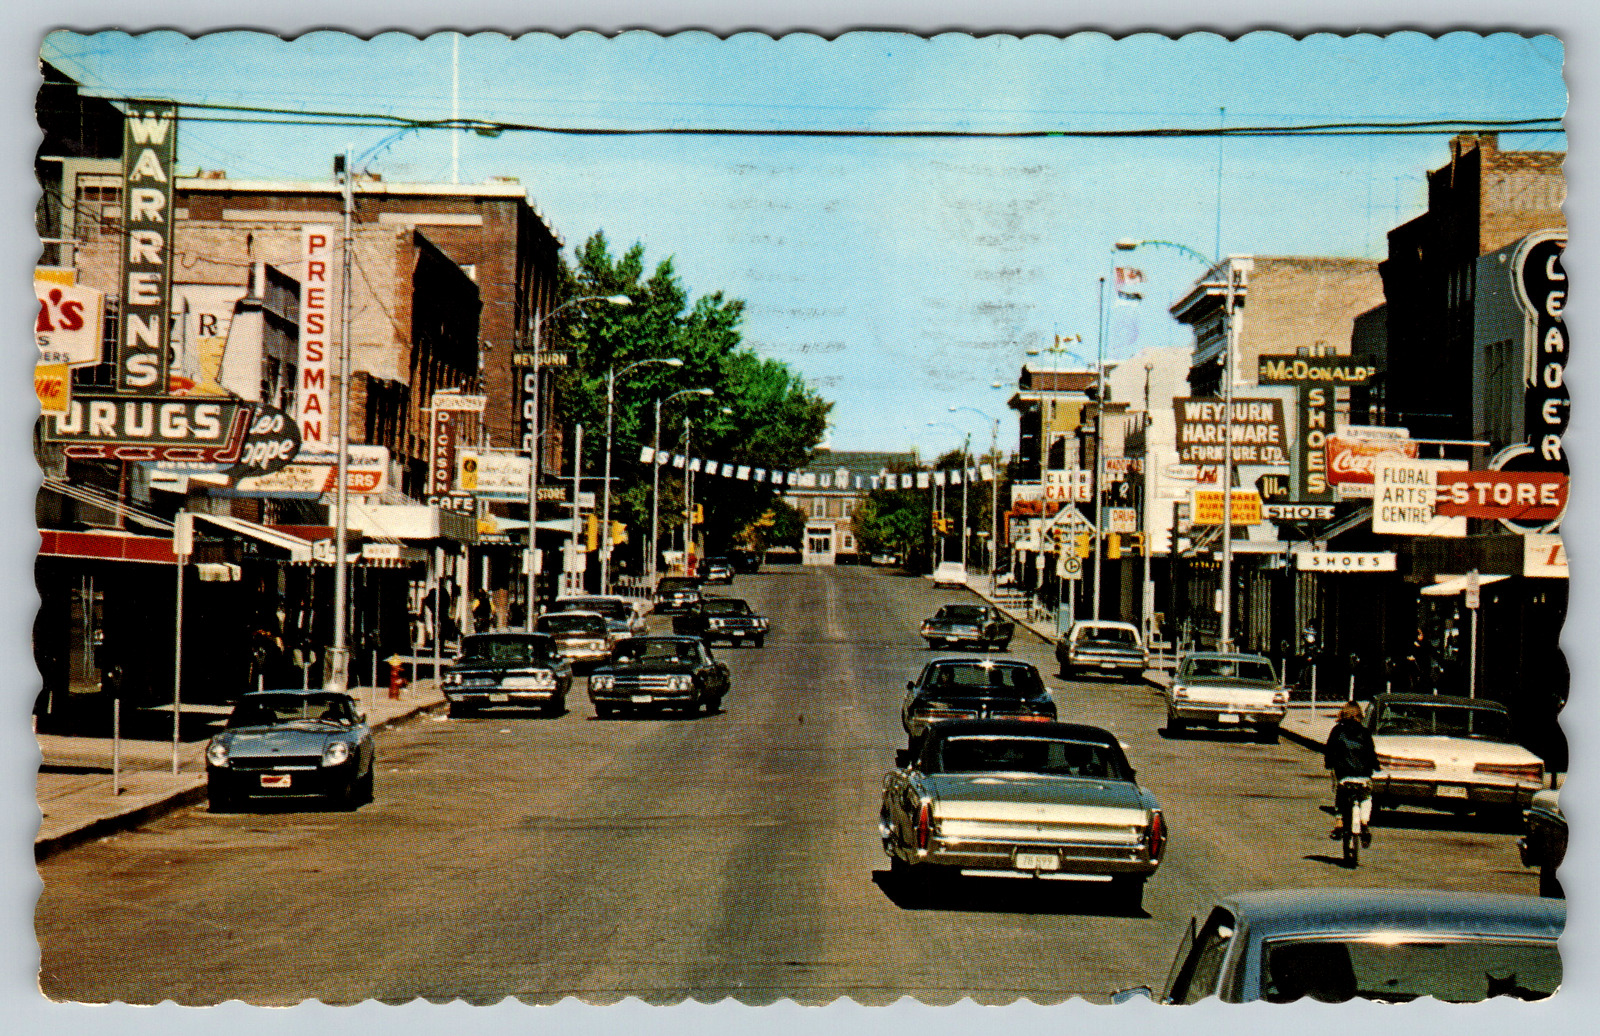 c1960s City of Weyburn Saskatchewan Canada Street View Vintage Postcard